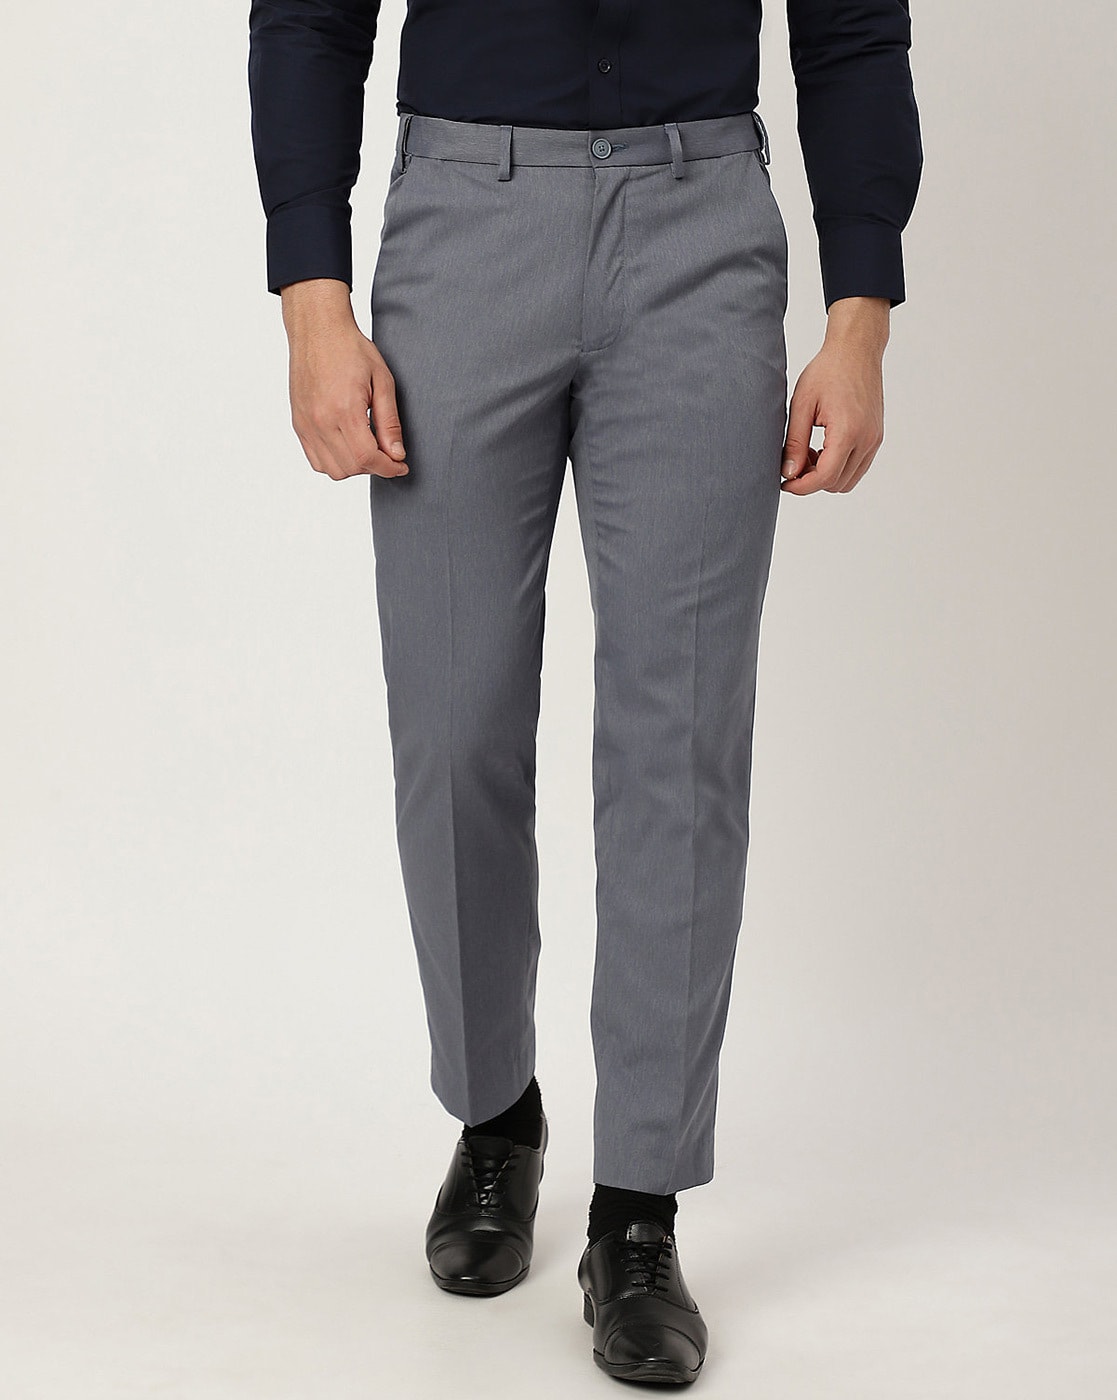 Buy Black Trousers  Pants for Men by Marks  Spencer Online  Ajiocom